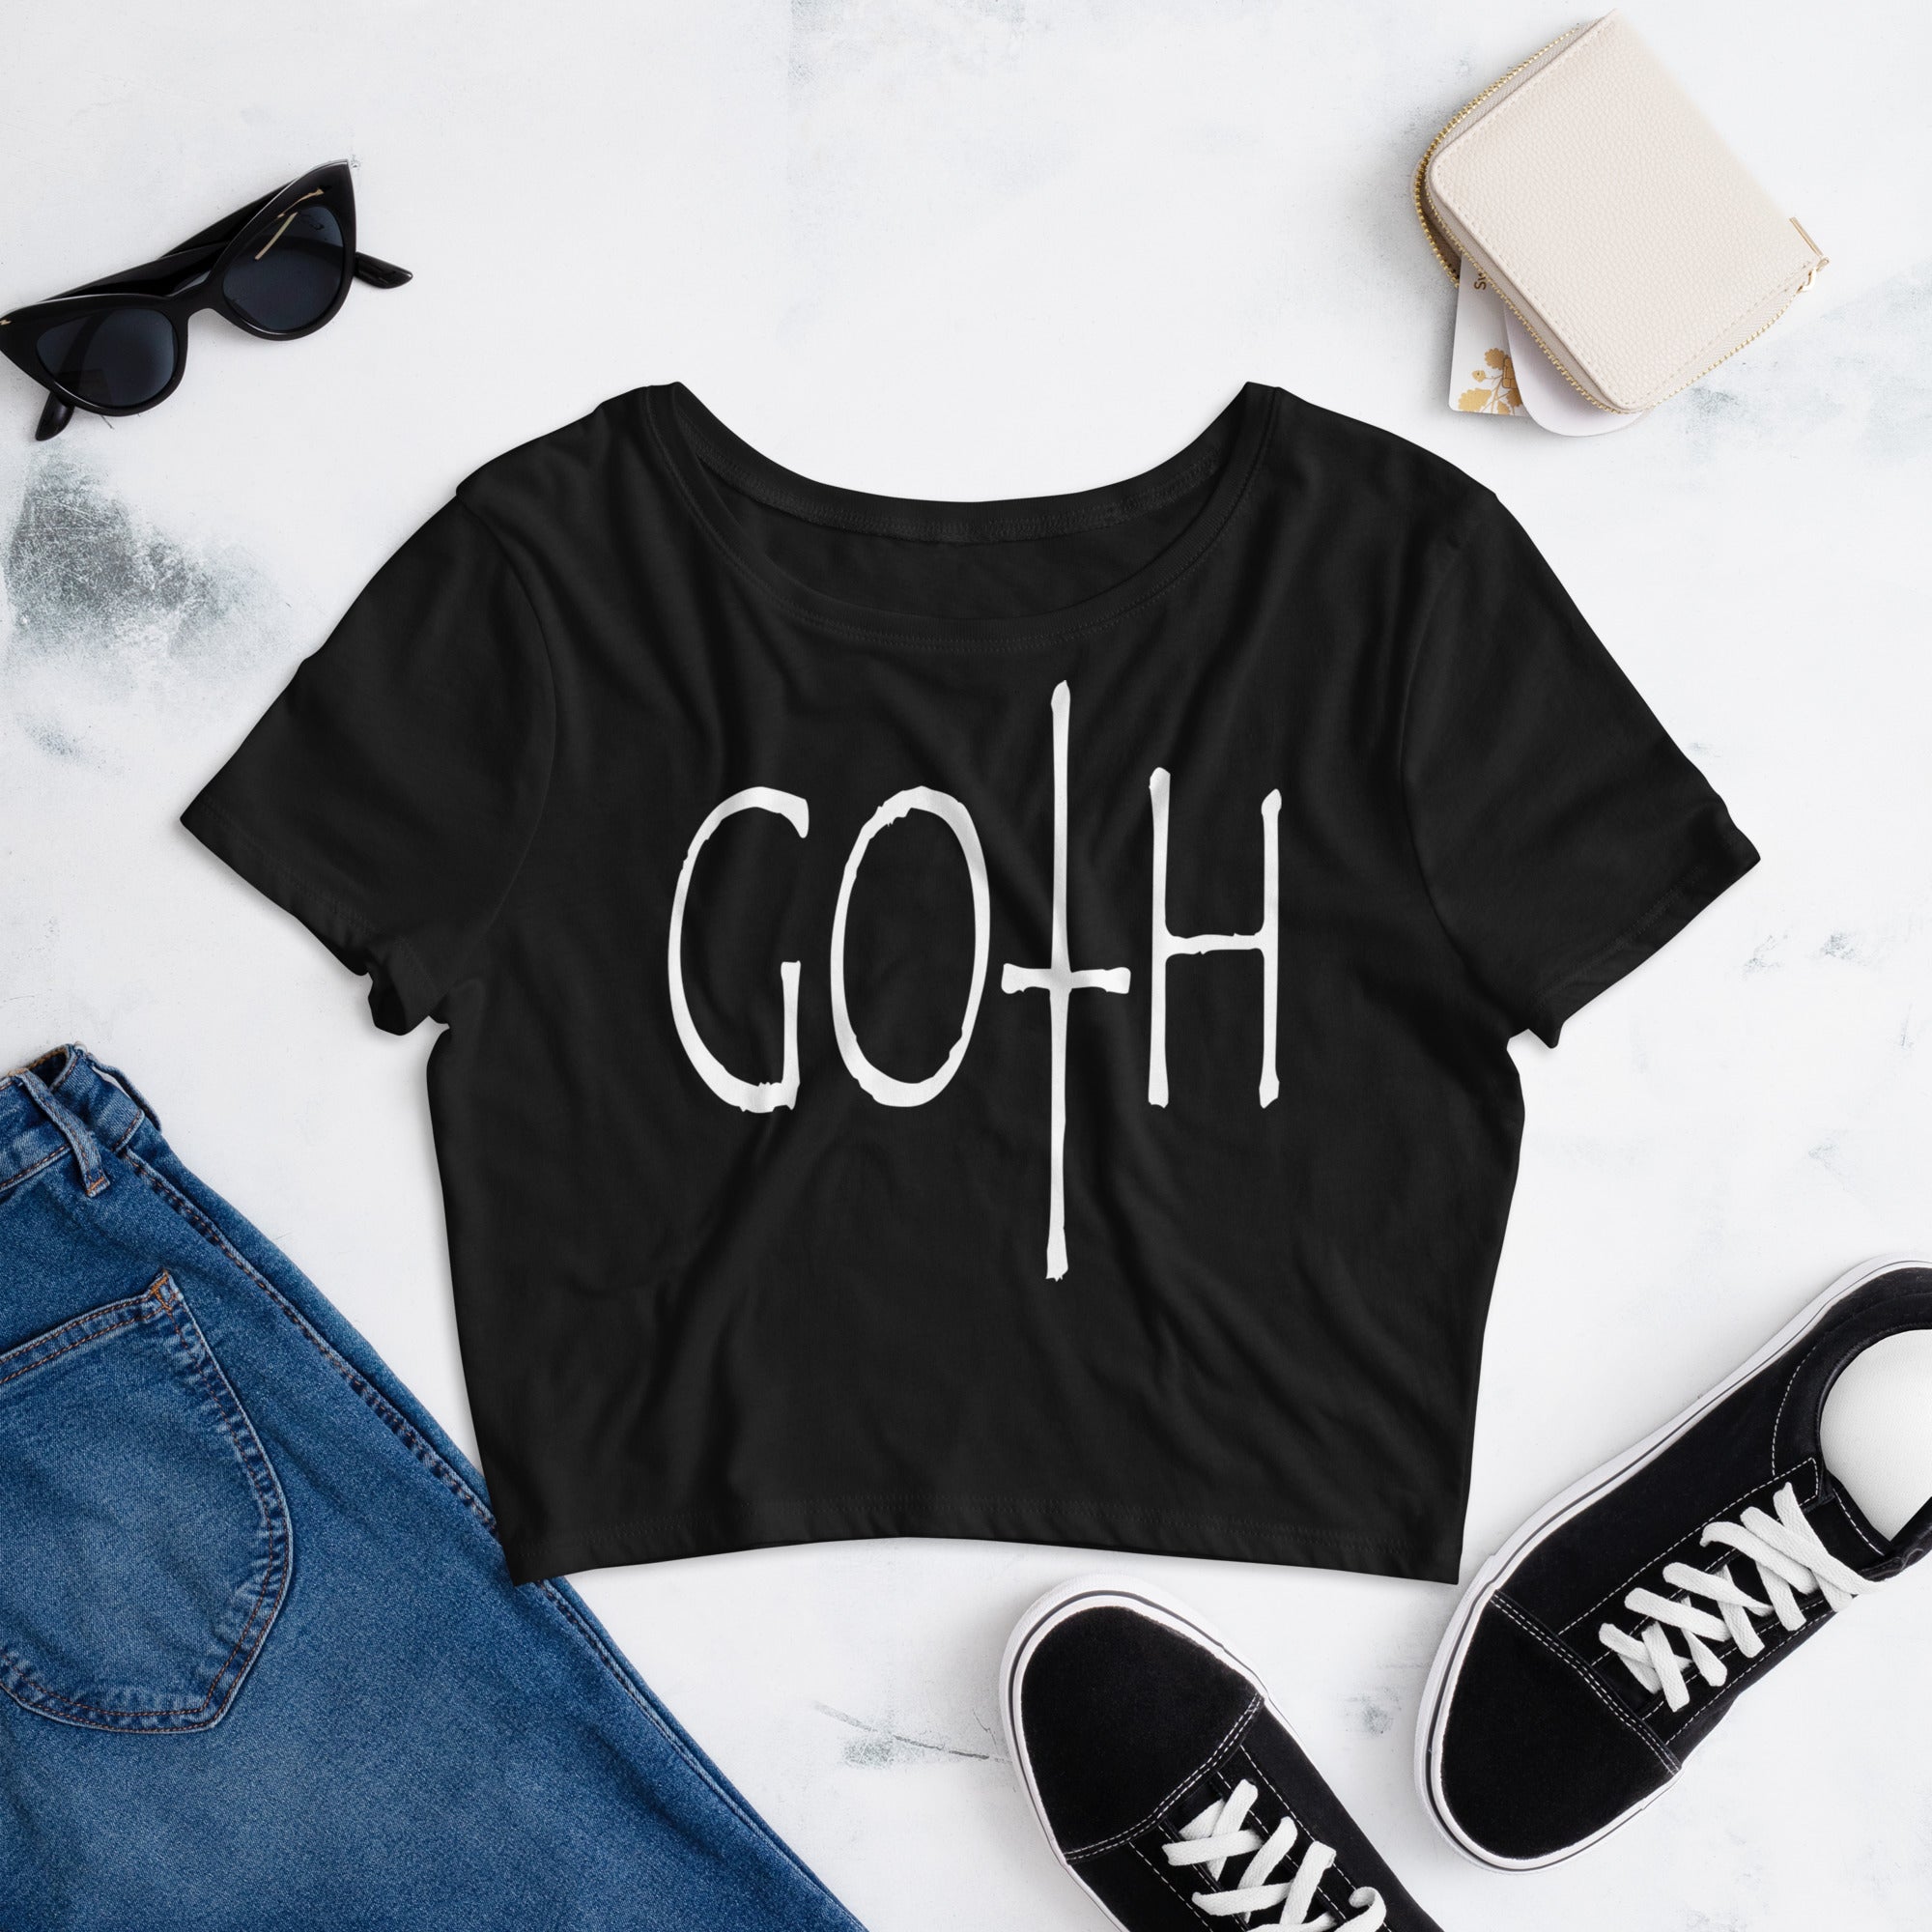 Goth Style Women’s Crop Top Tee Shirt - Edge of Life Designs